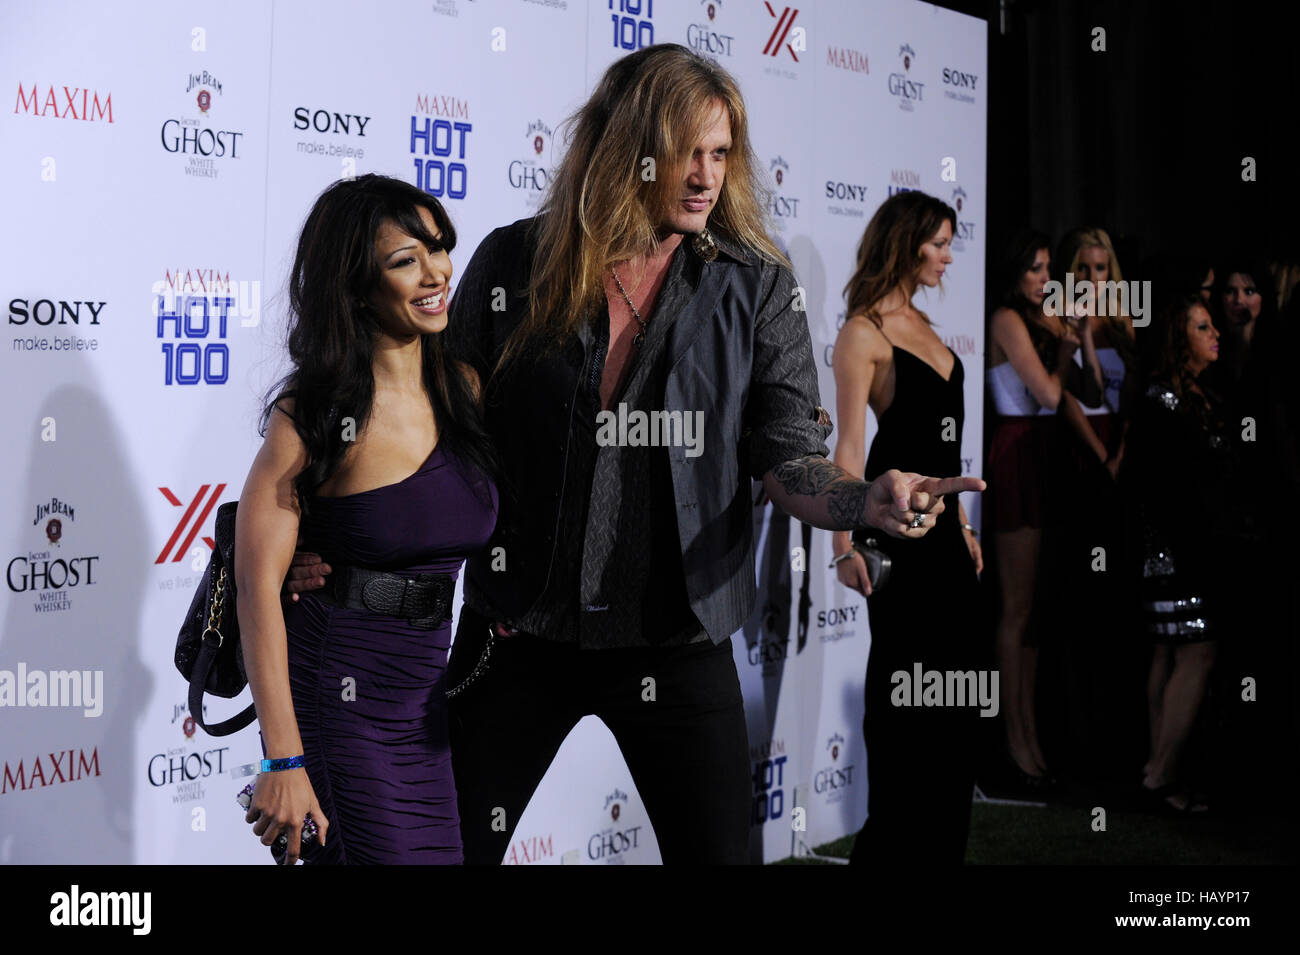 Sebastian Bach And Minnie Gupta Attends The Maxim 2013 Hot 100 Annual